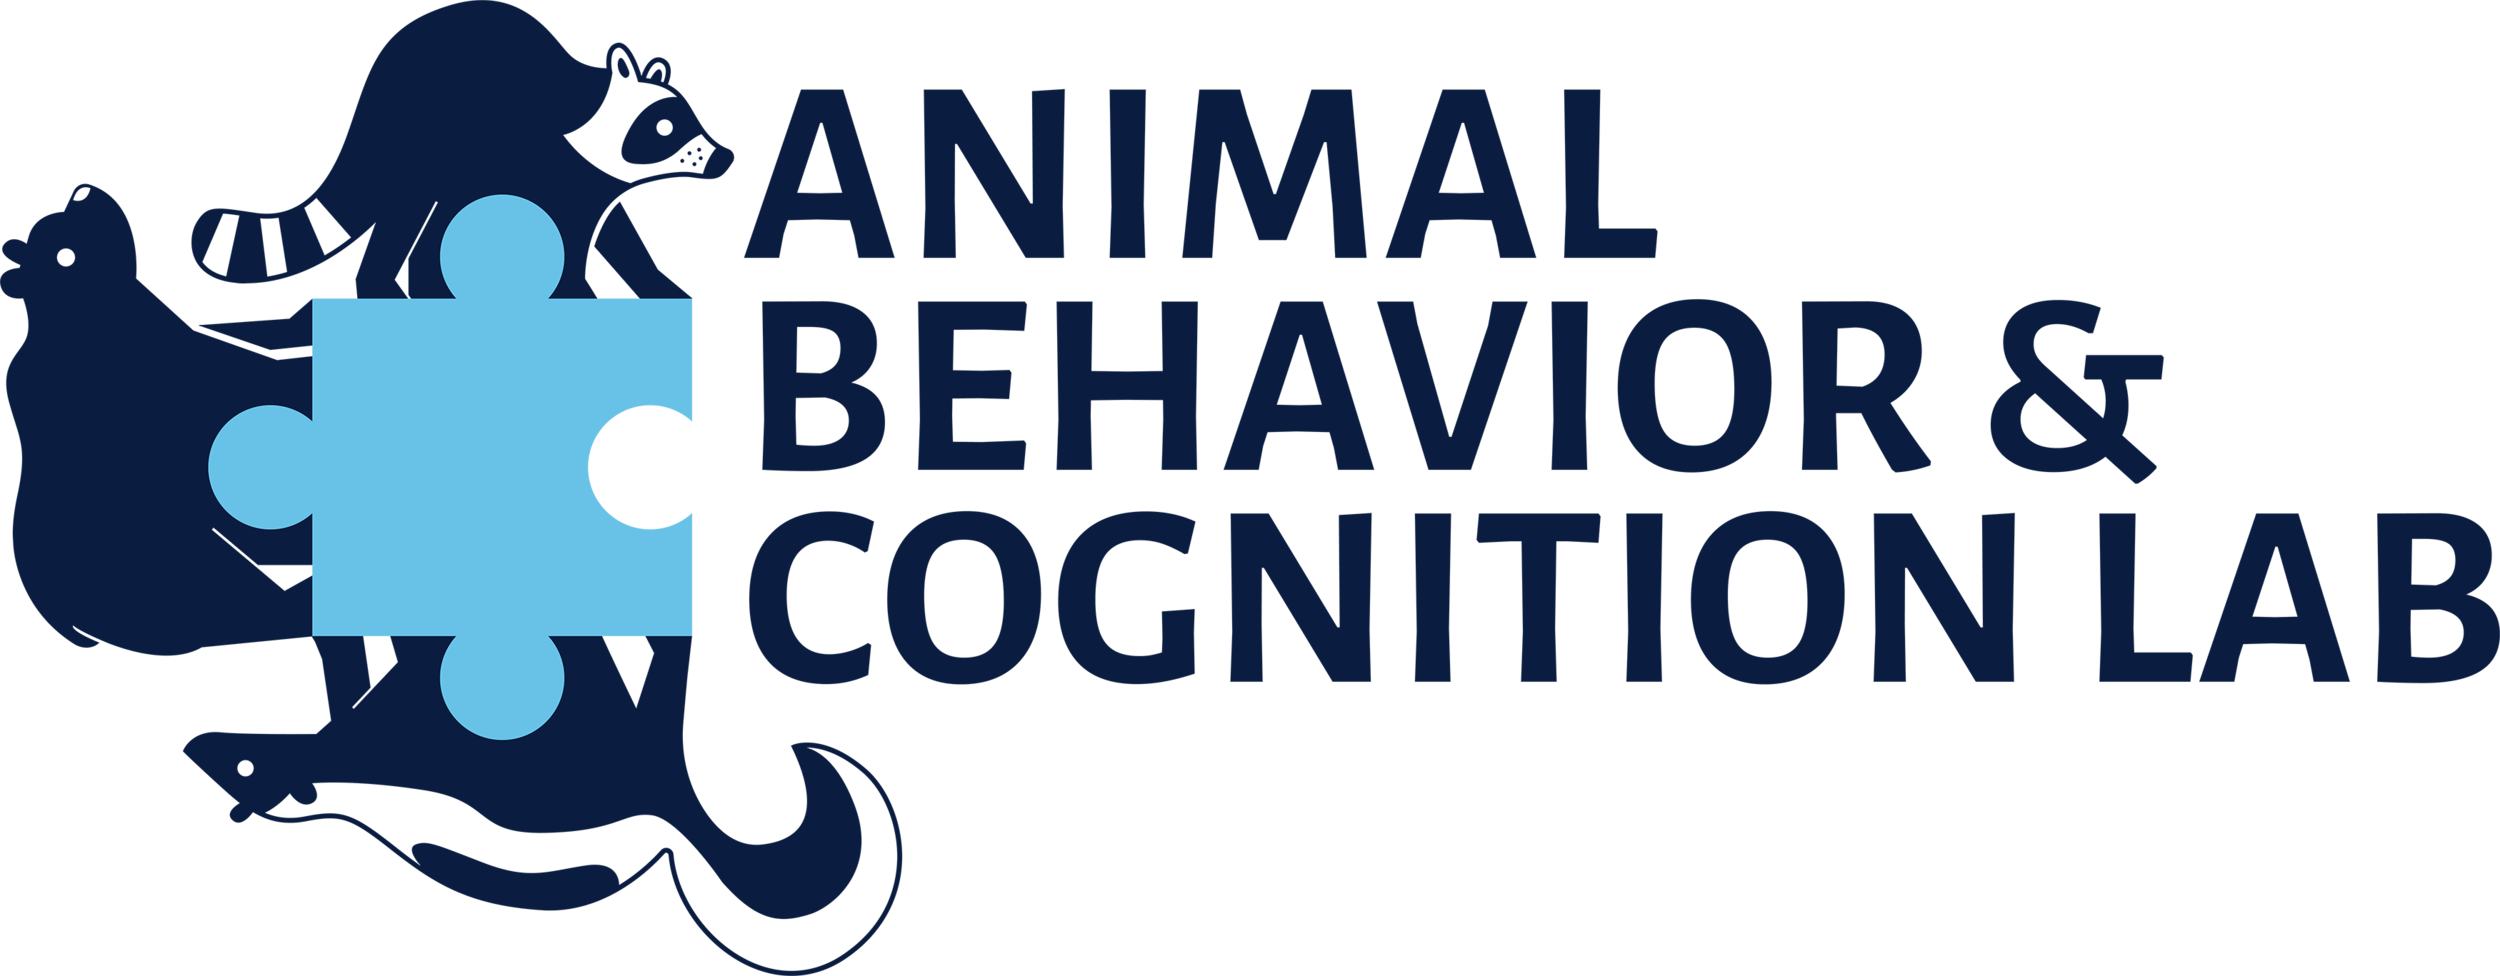 Animal Behavior & Cognition Lab